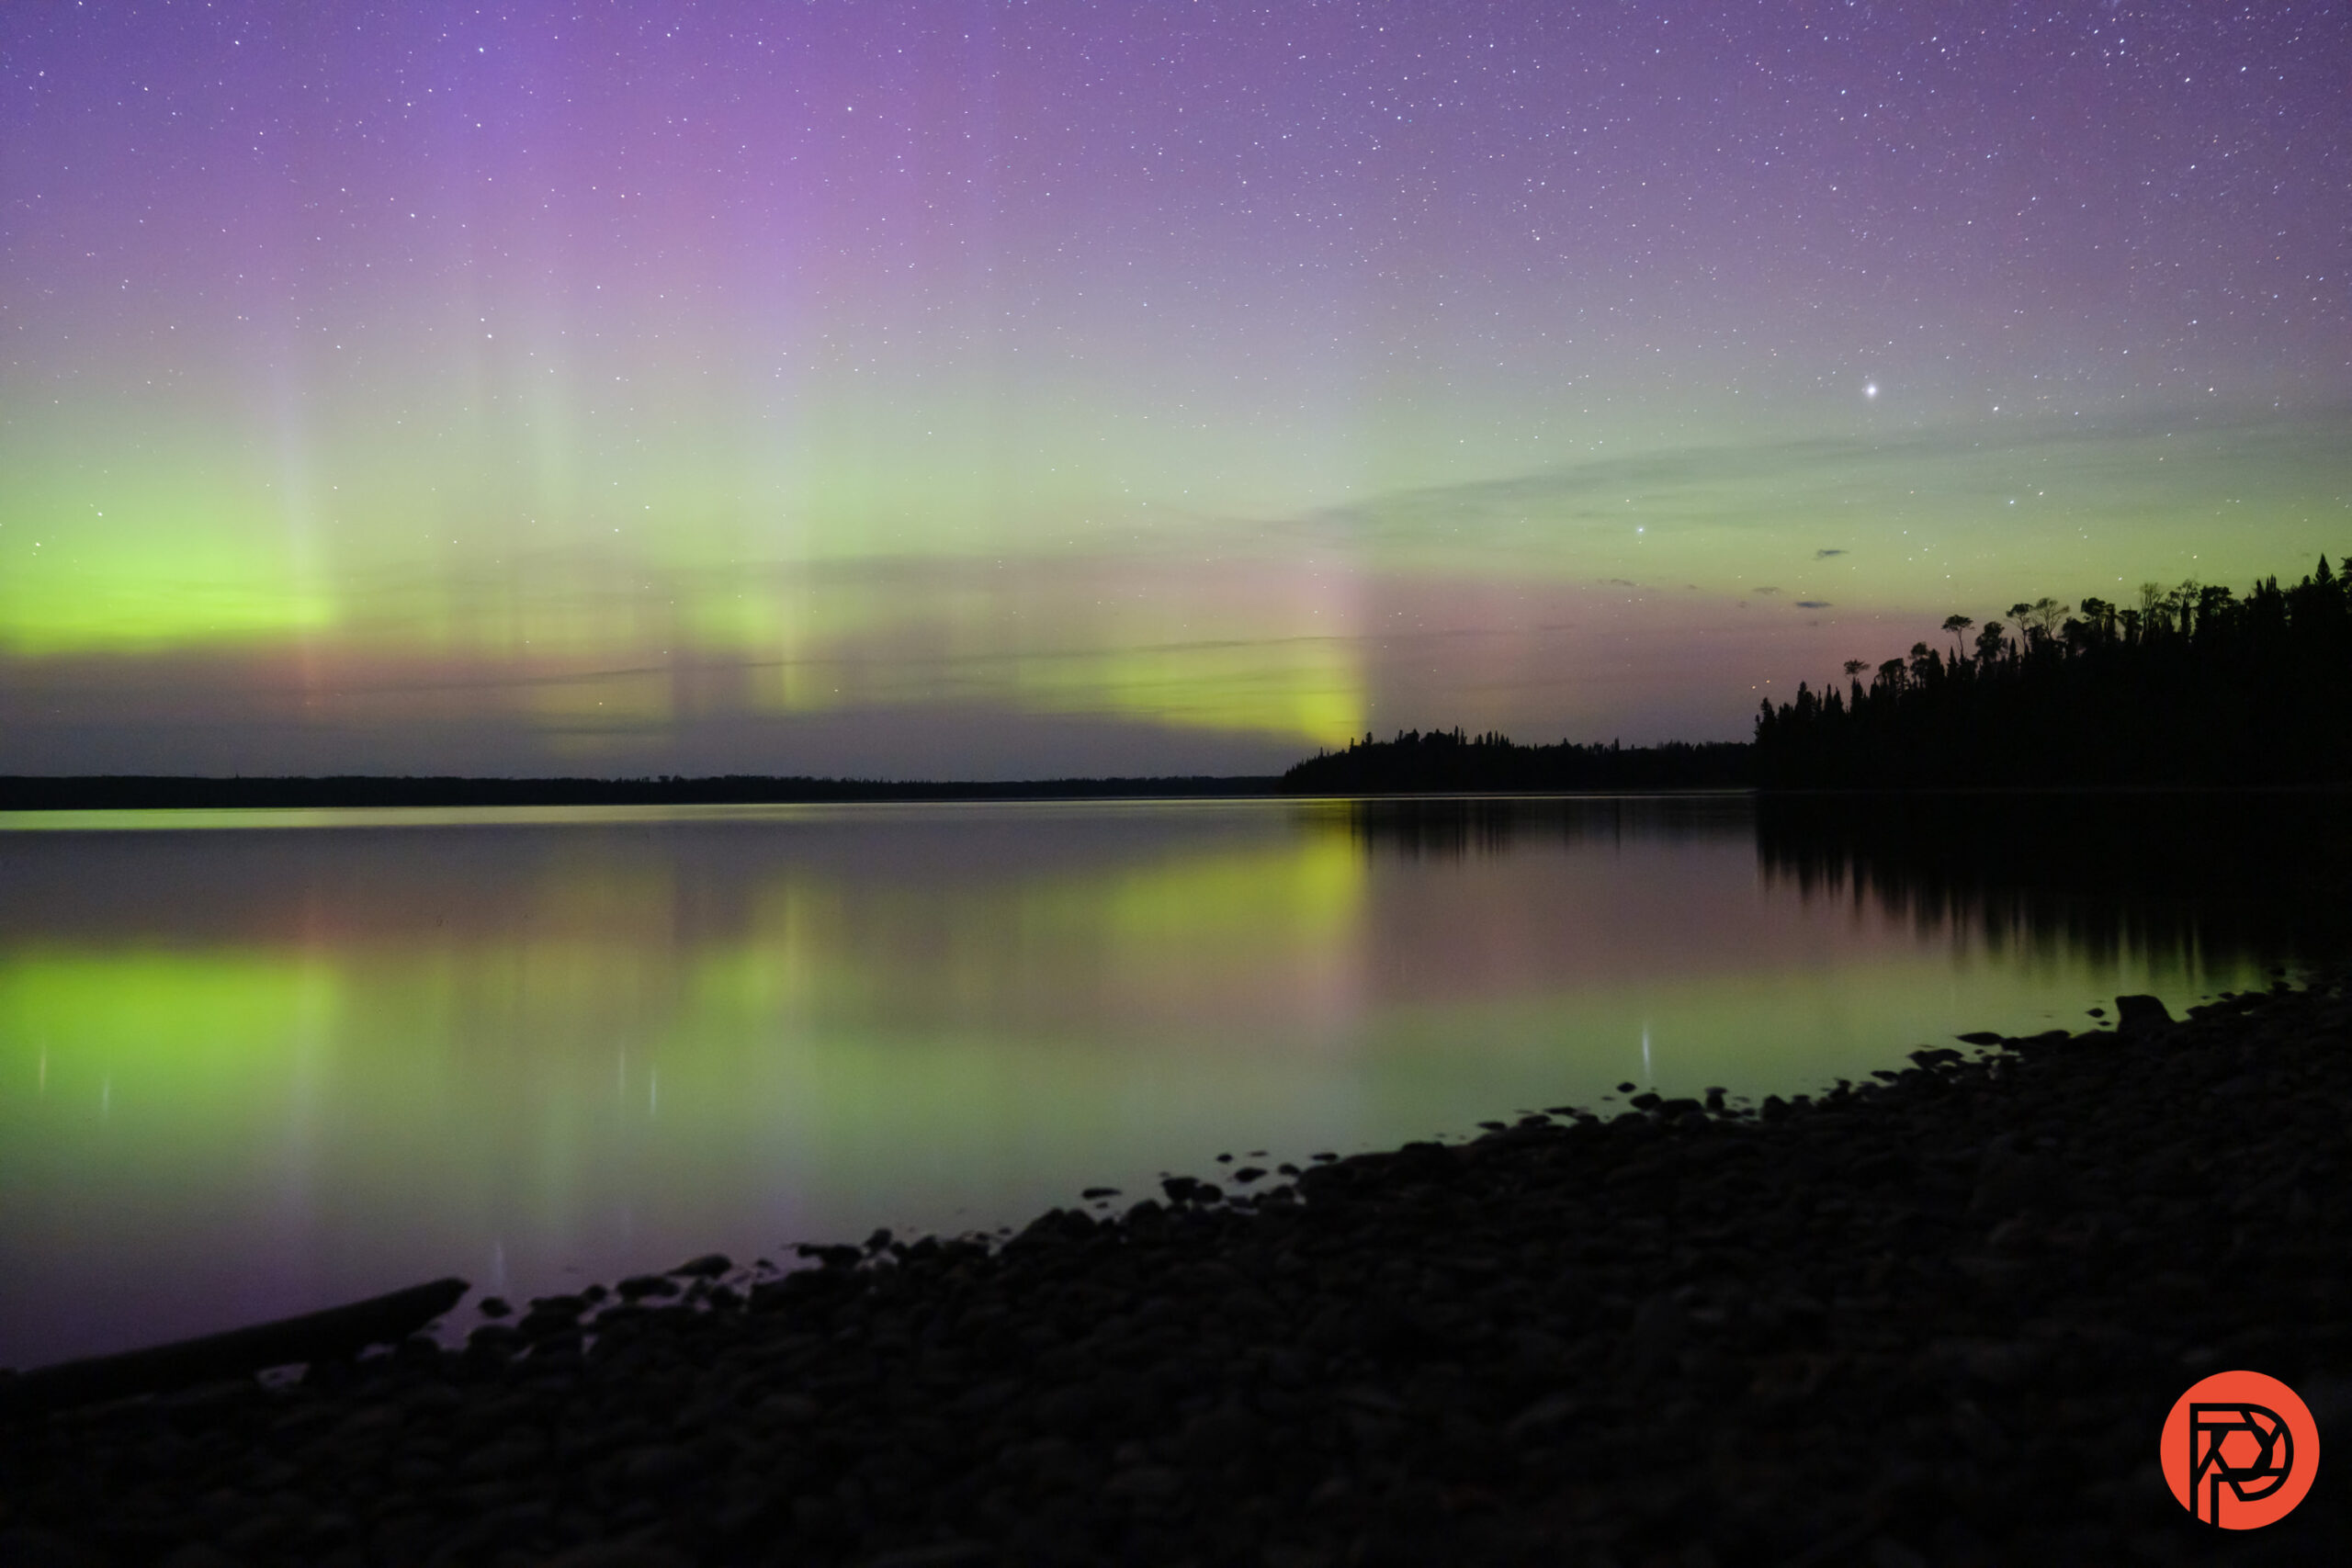 Hillary Grigonis The Phoblographer how to photograph aurora borealis northern lights-5030